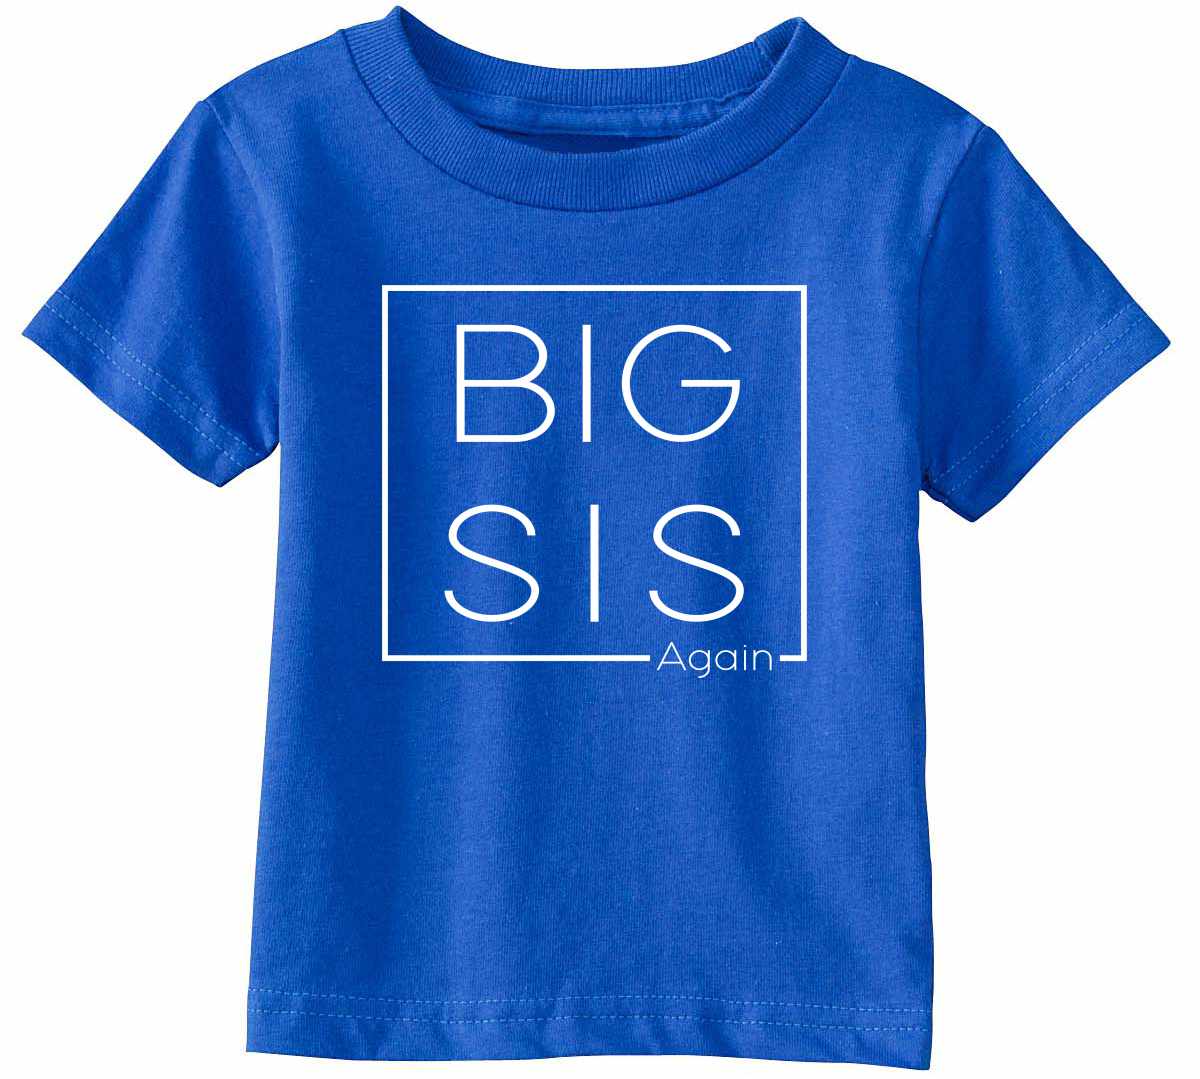 Big Sis Again - Big Sister Boxed on Infant-Toddler T-Shirt (#1312-7)